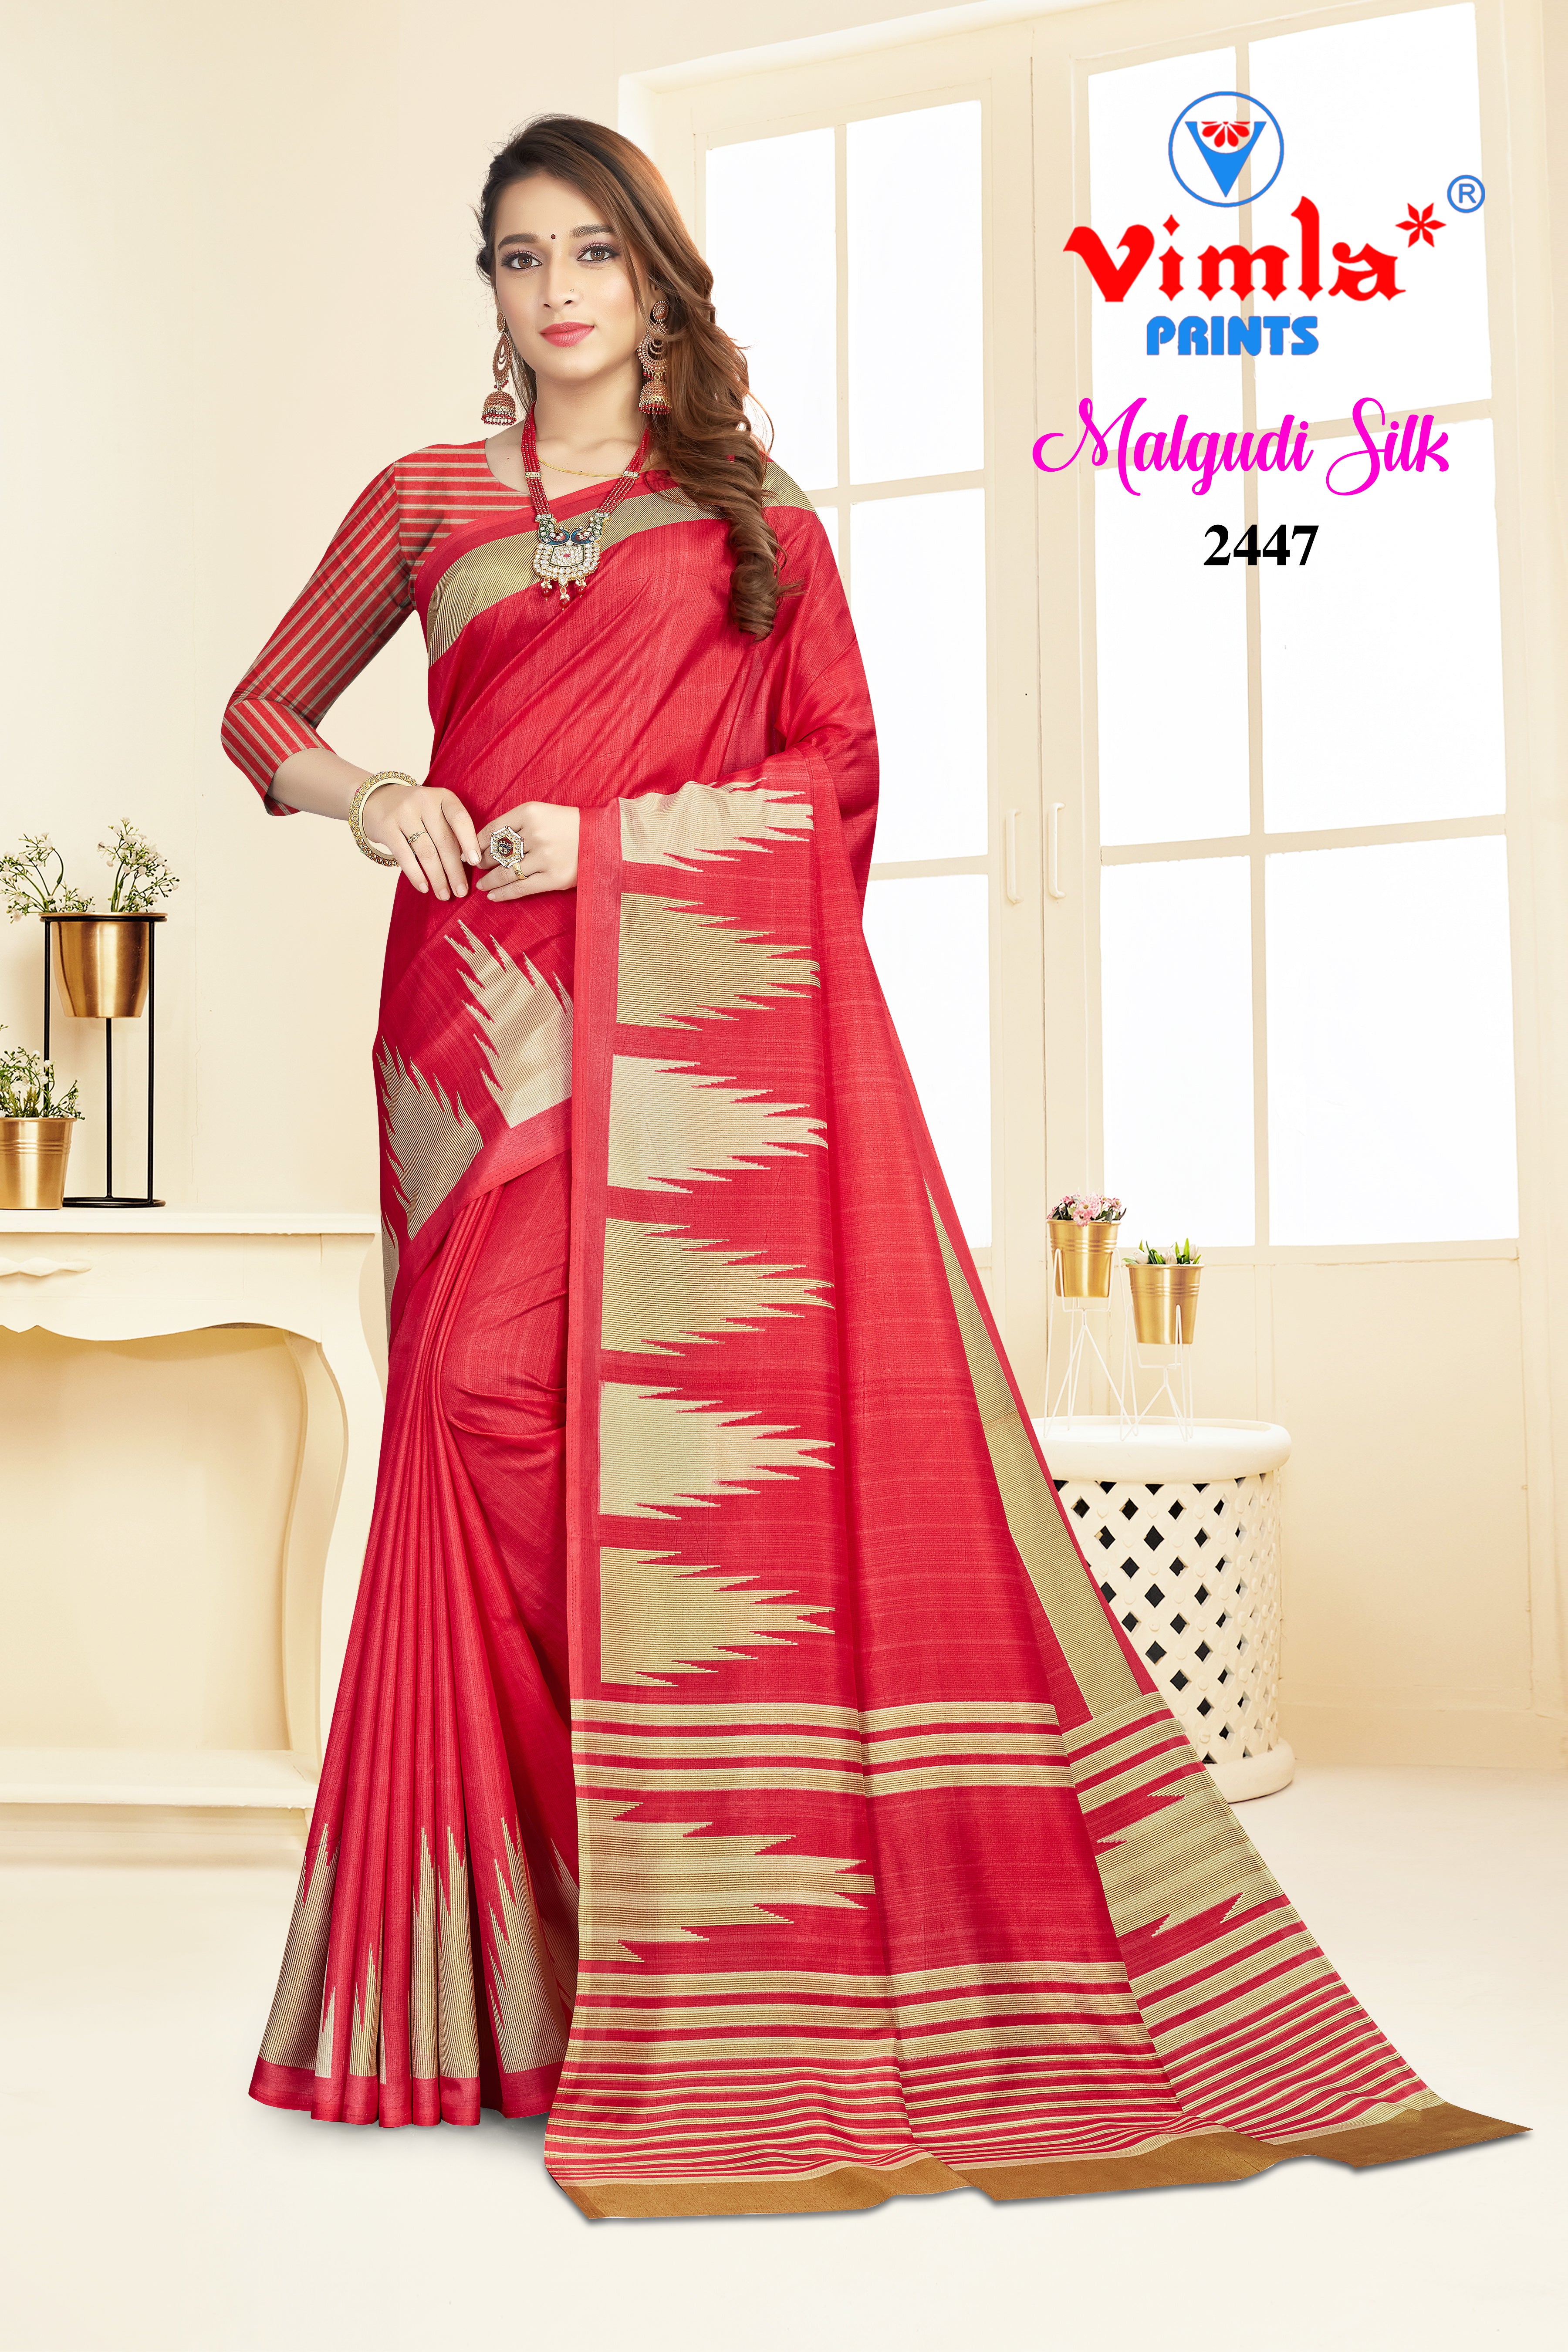 Vimla Prints Women's Red Malgudi Art Silk Uniform Saree with Blouse Piece (2447_24)